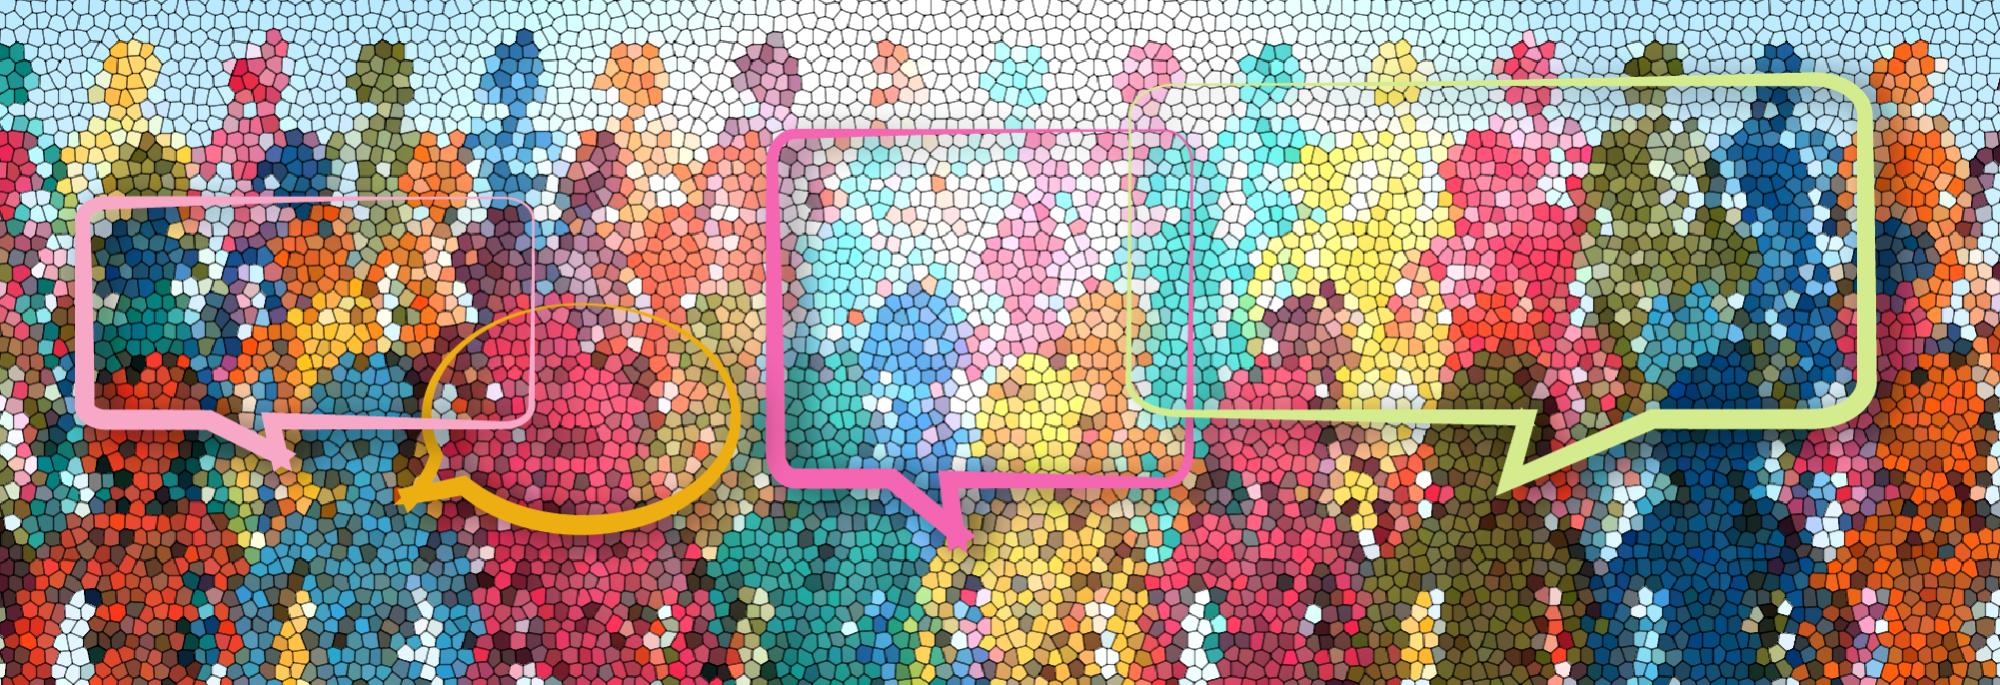 colourful mosaic image